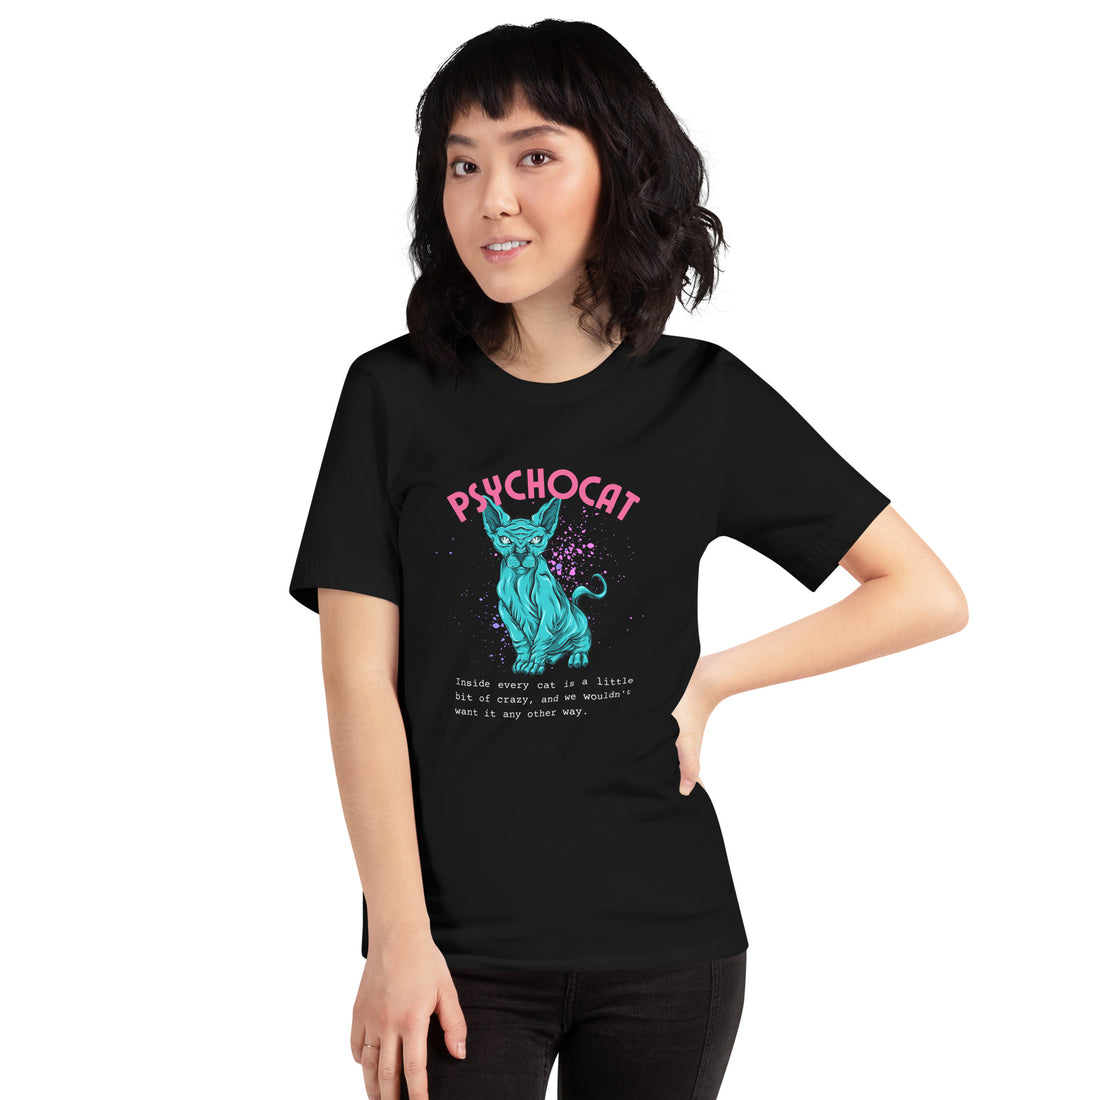 Psychocat Graphic T-shirt